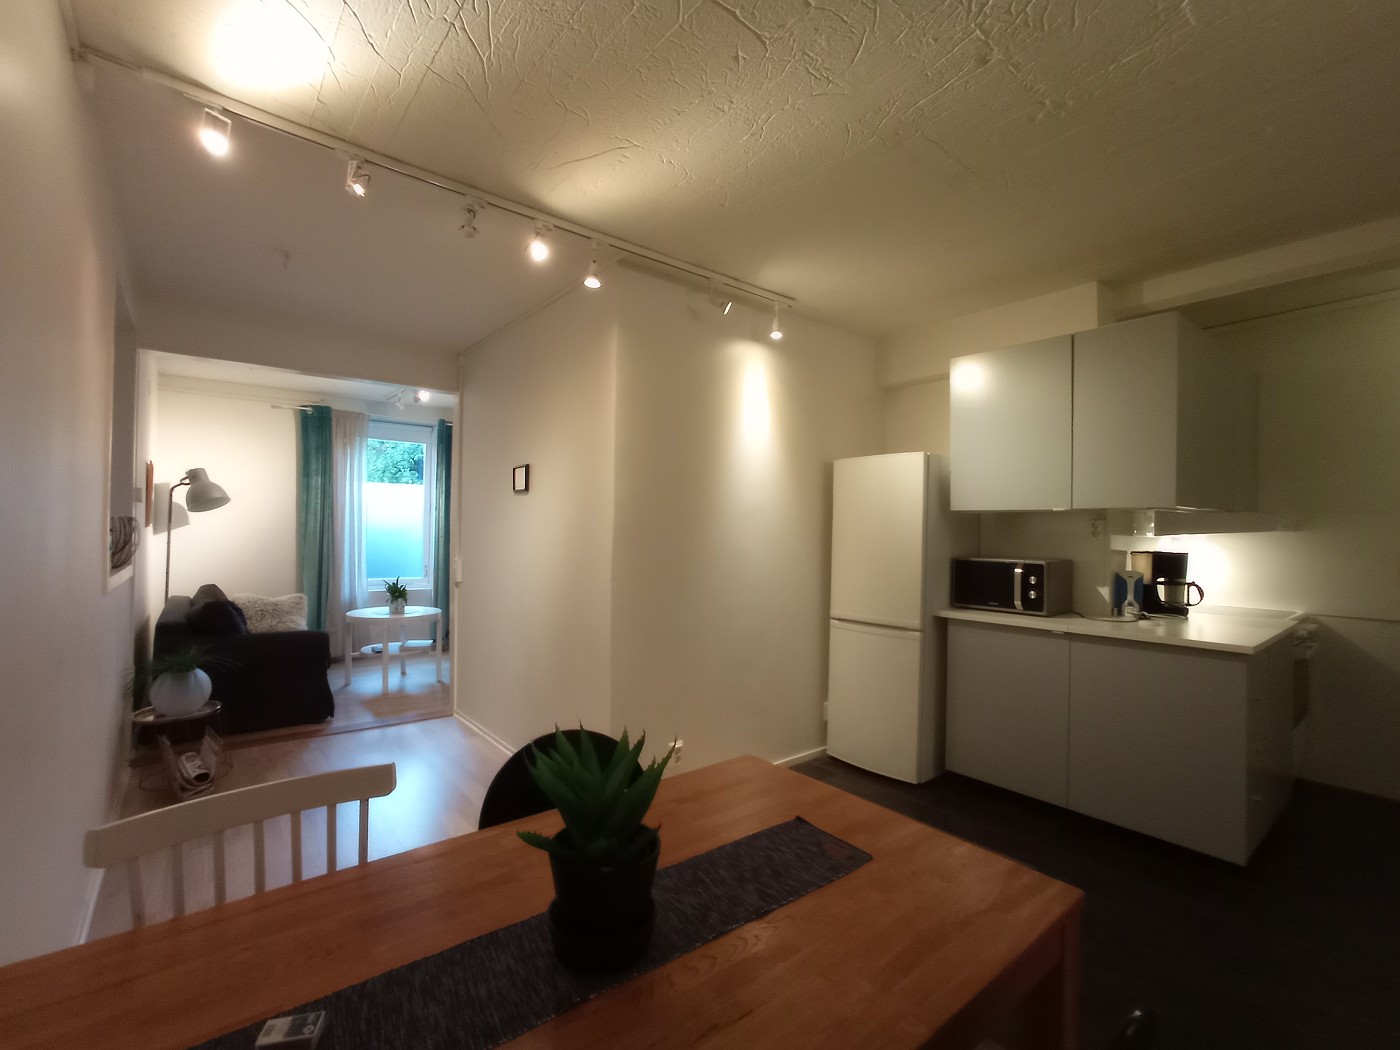 27 living room kitchen Mariehamn airbnb downtown